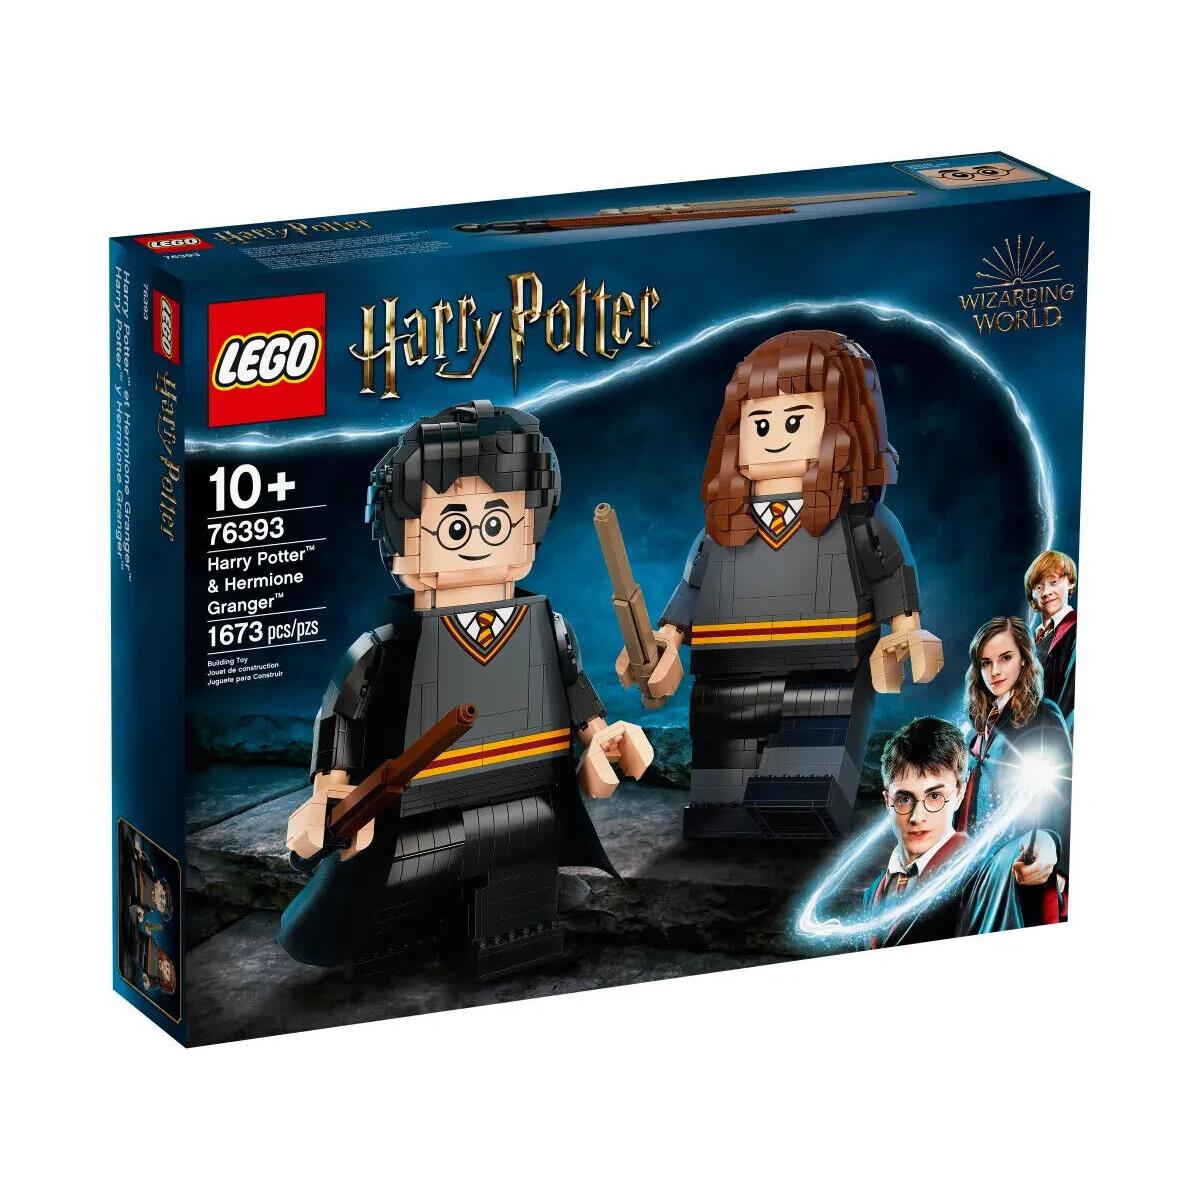 Lego Wizarding World Building Set 76393 Harry Potter Hermione Granger 1673pcs